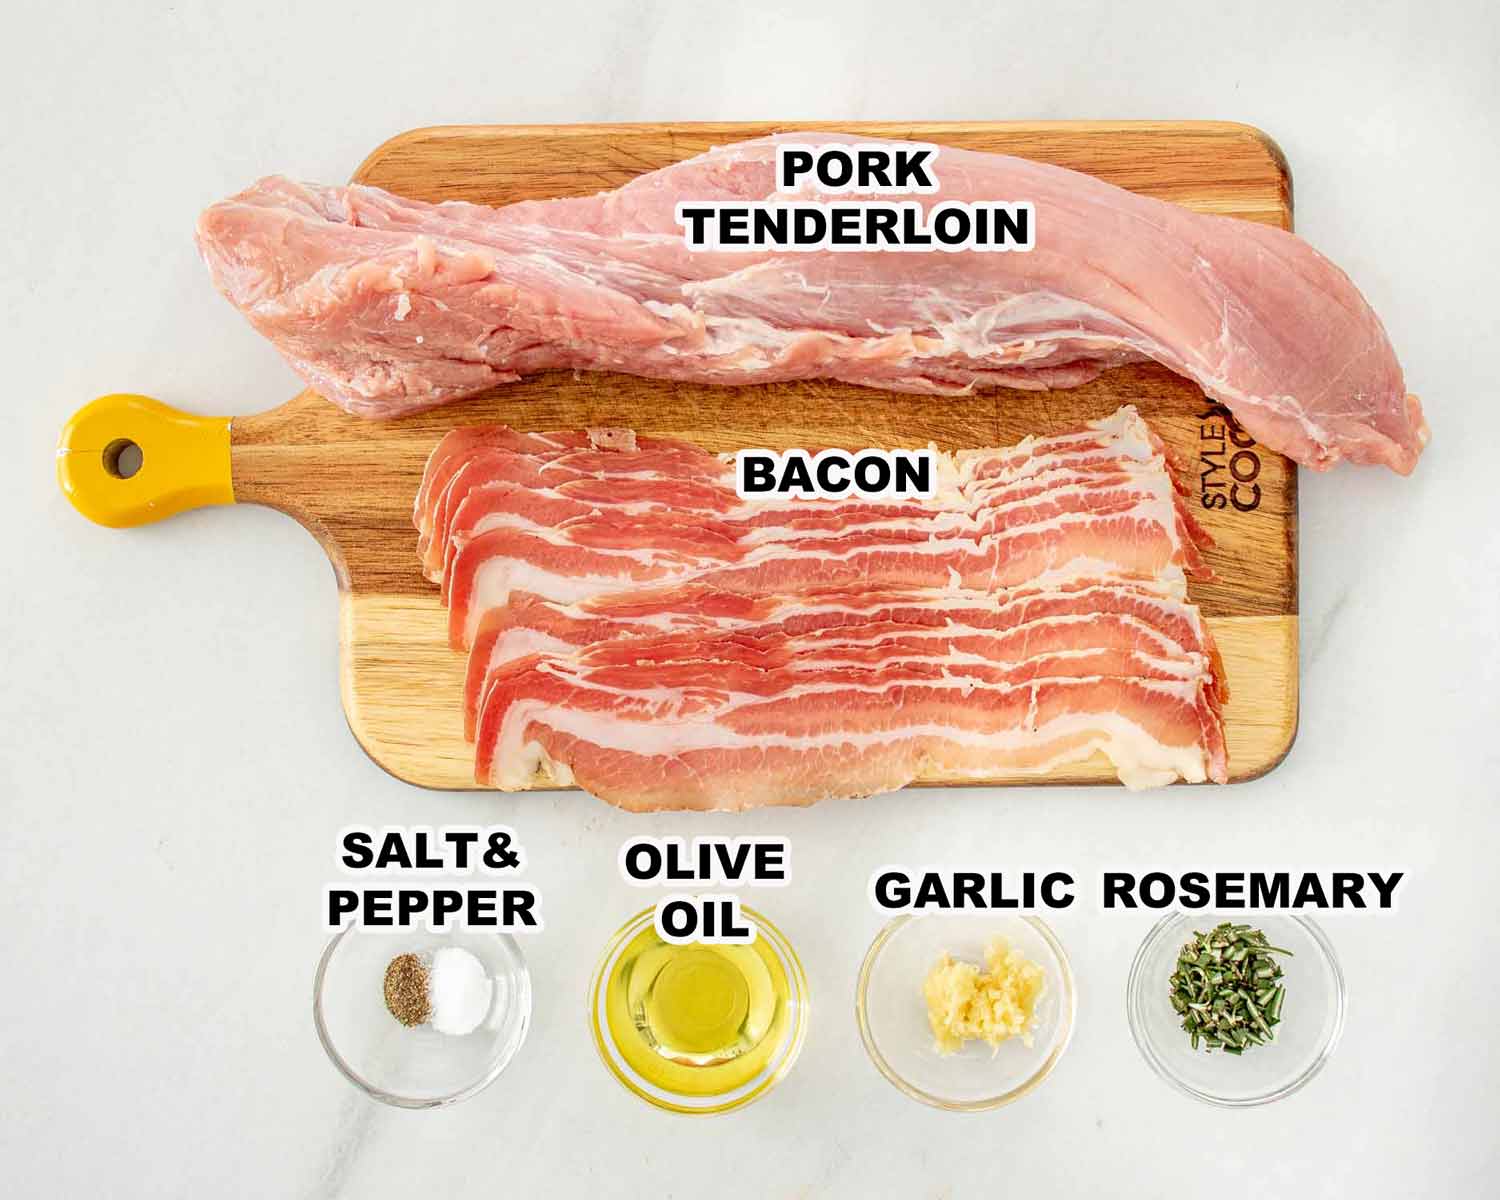 ingredients needed to make bacon wrapped pork tenderloin.